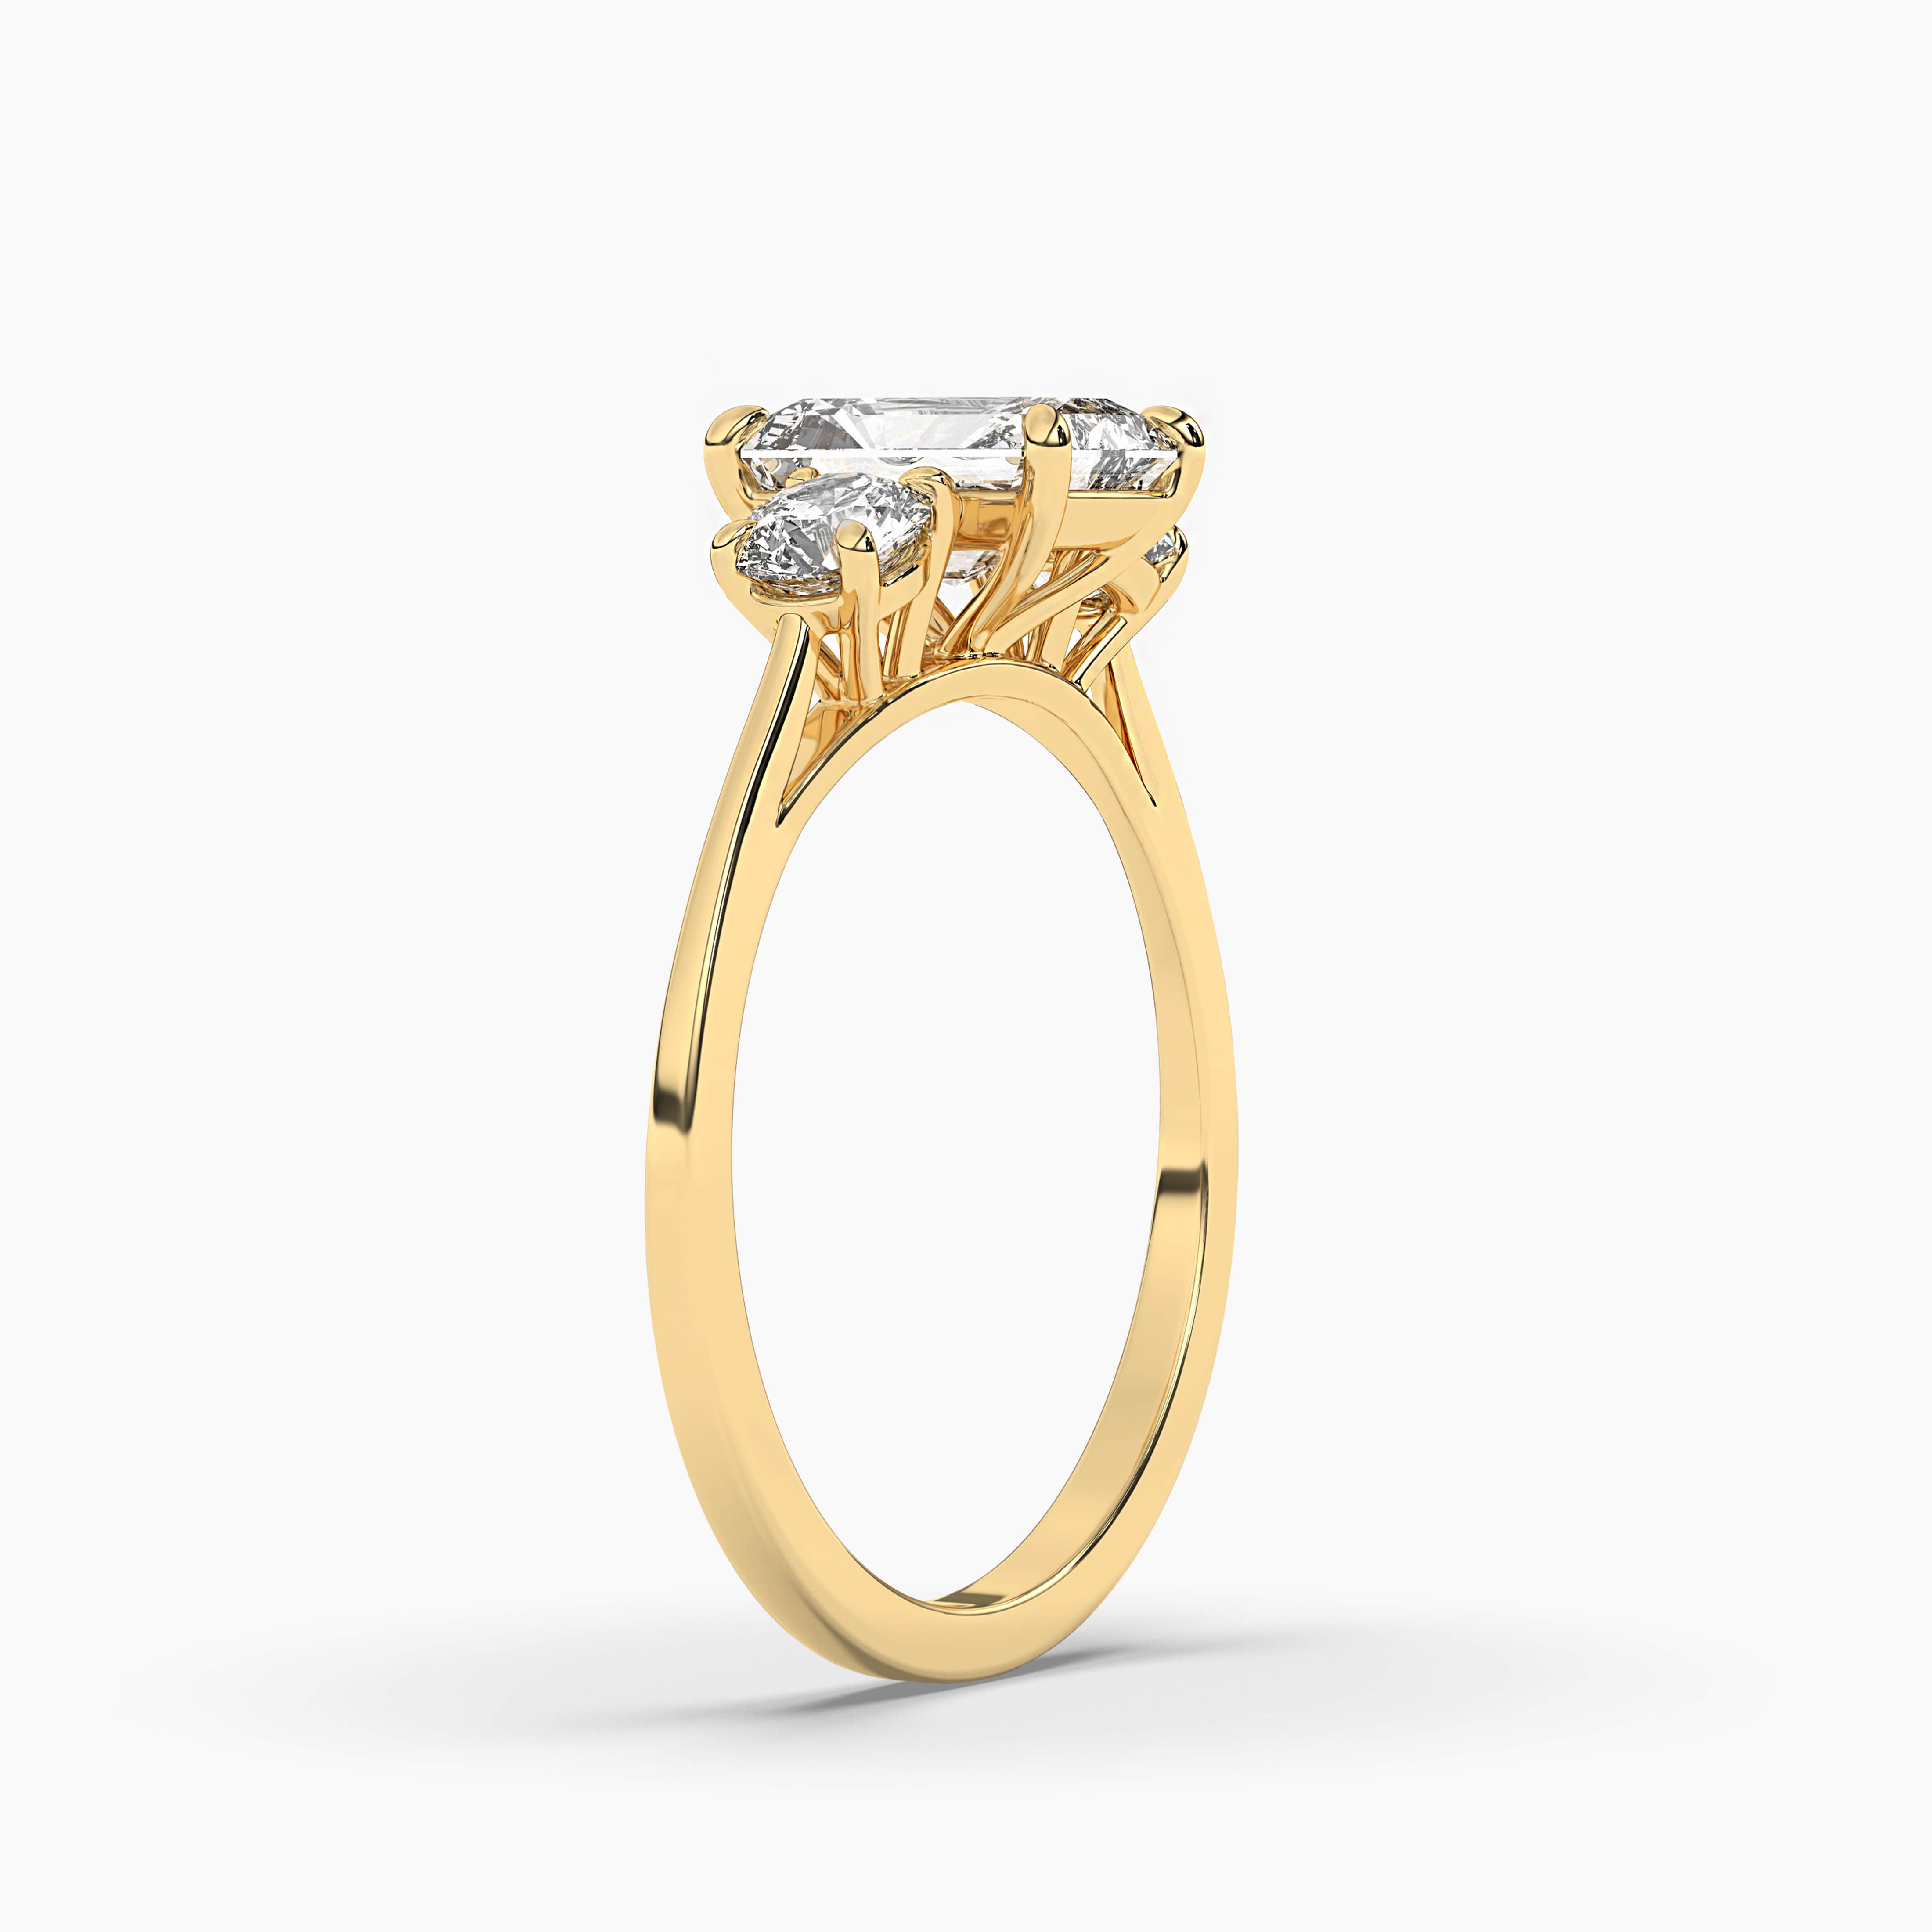  The Three Stone Radiant Engagement Ring